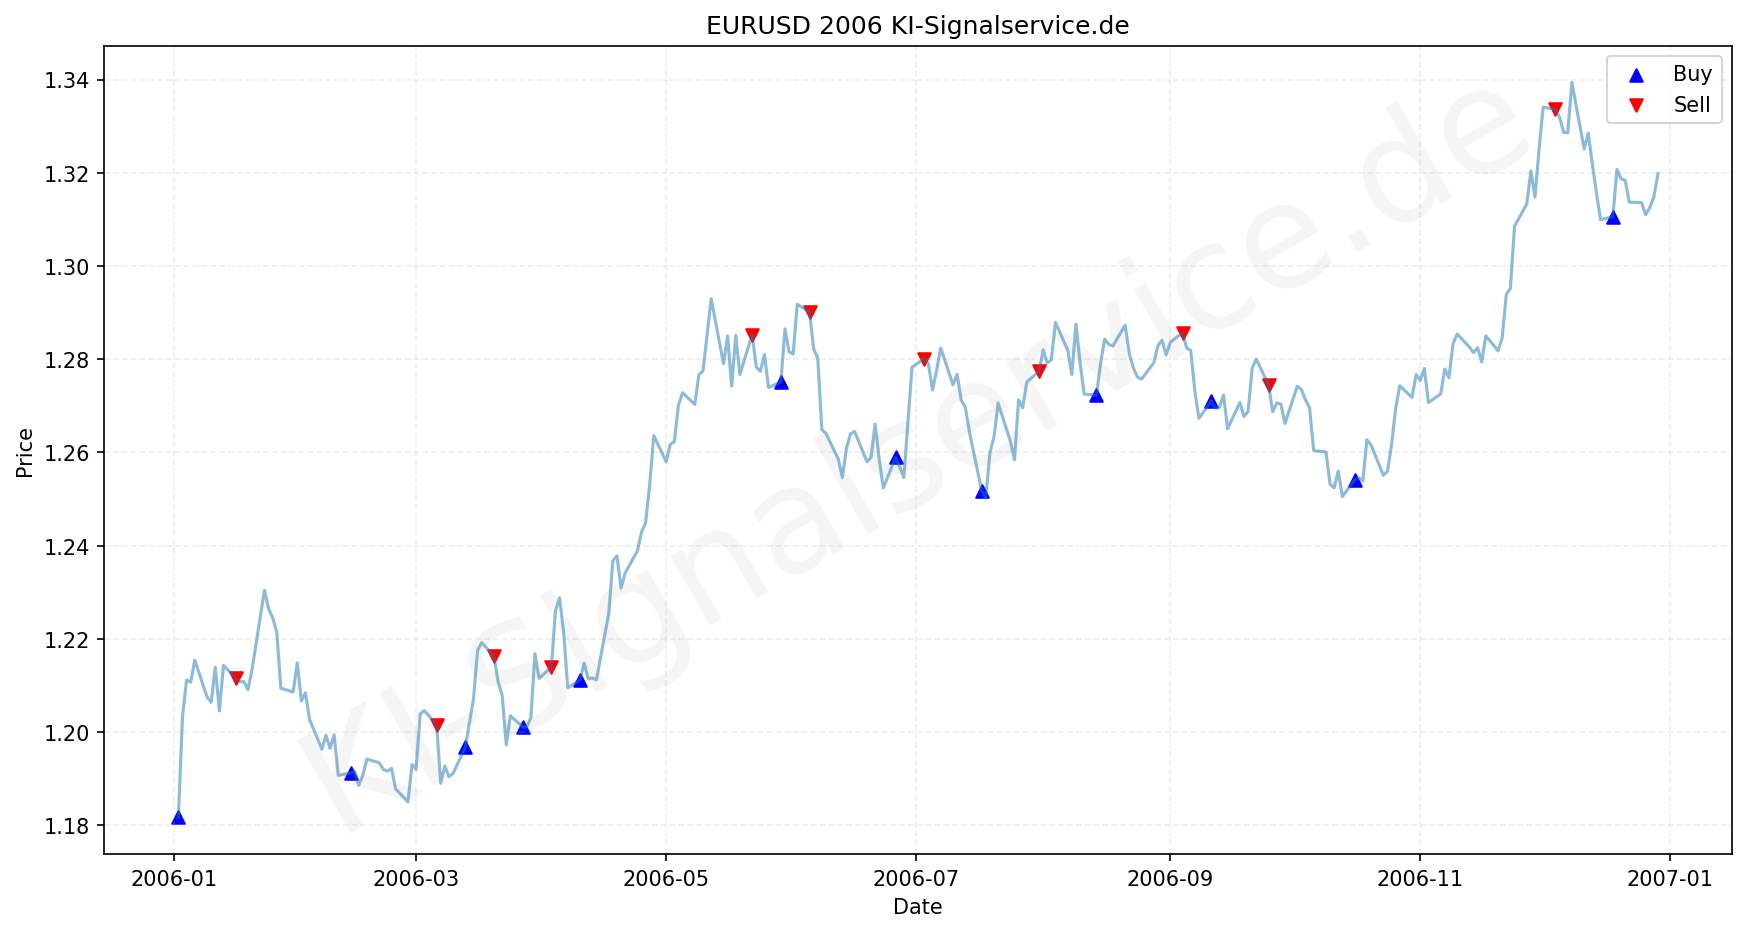 EURUSD Chart - KI Tradingsignale 2006